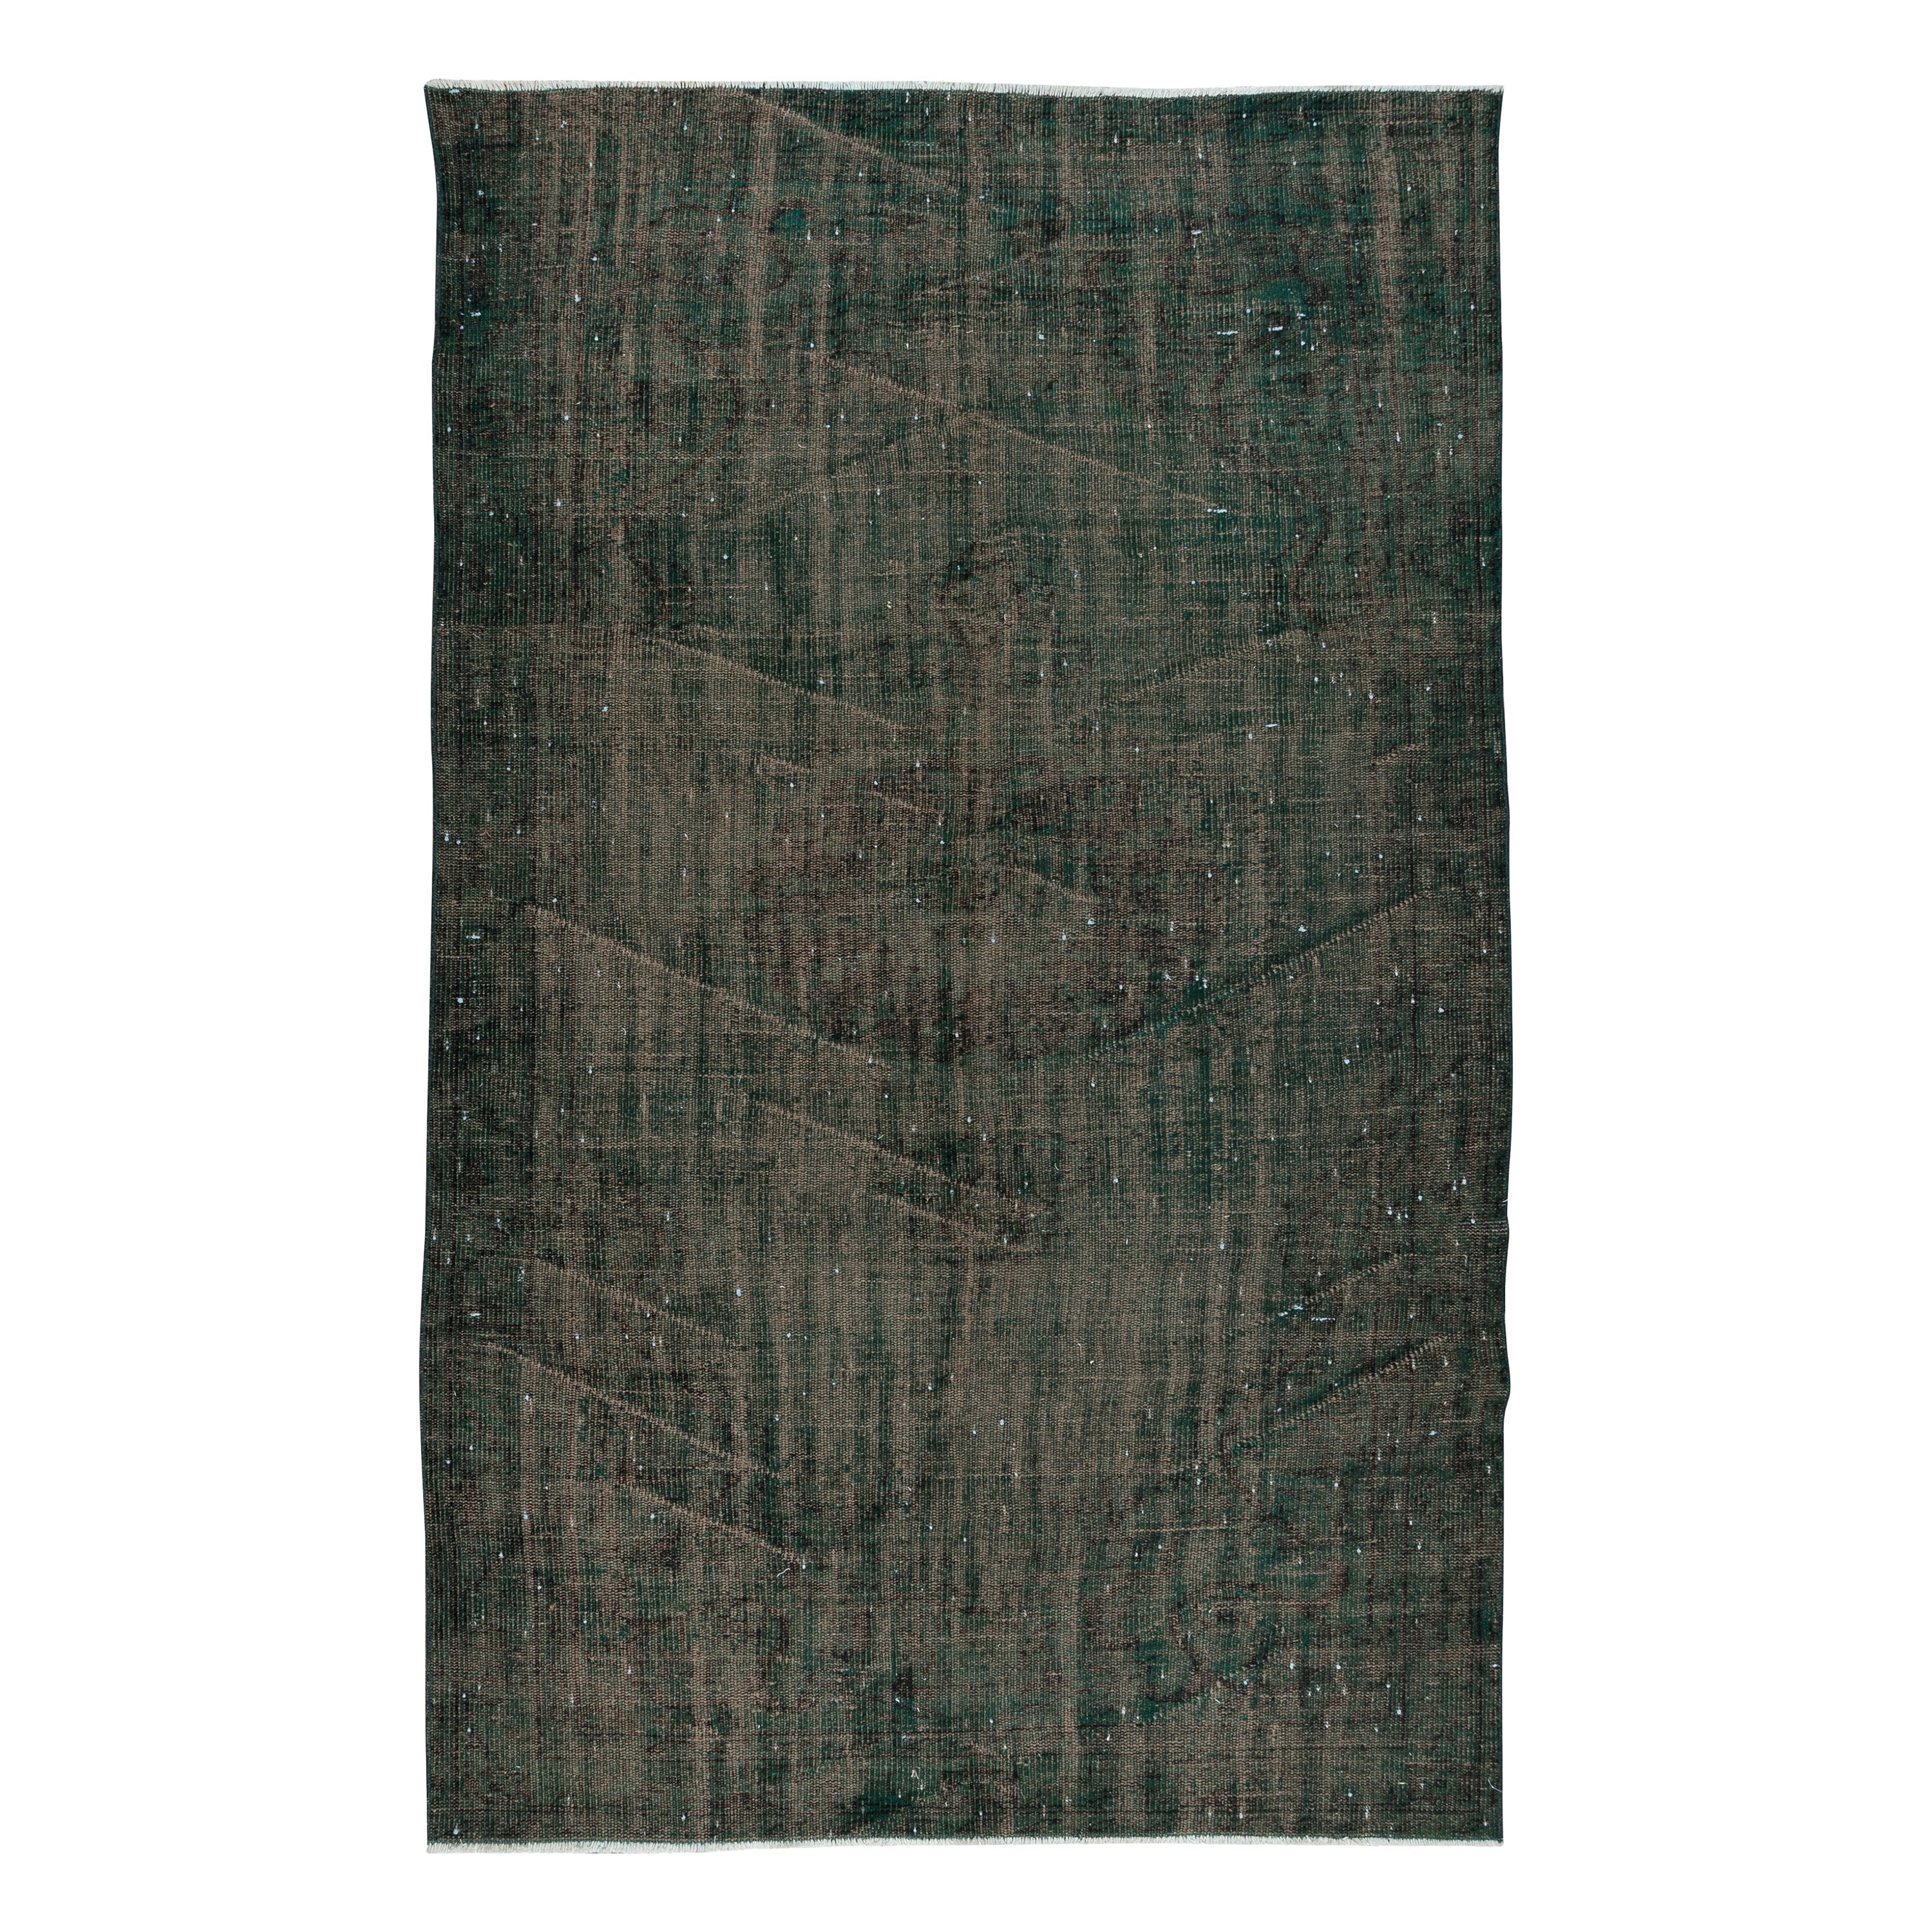 5.3x8.5 Ft Distressed Dark Green Rug, Handmade Turkish Shabby Chic Carpet (Tapis turc de style shabby chic)